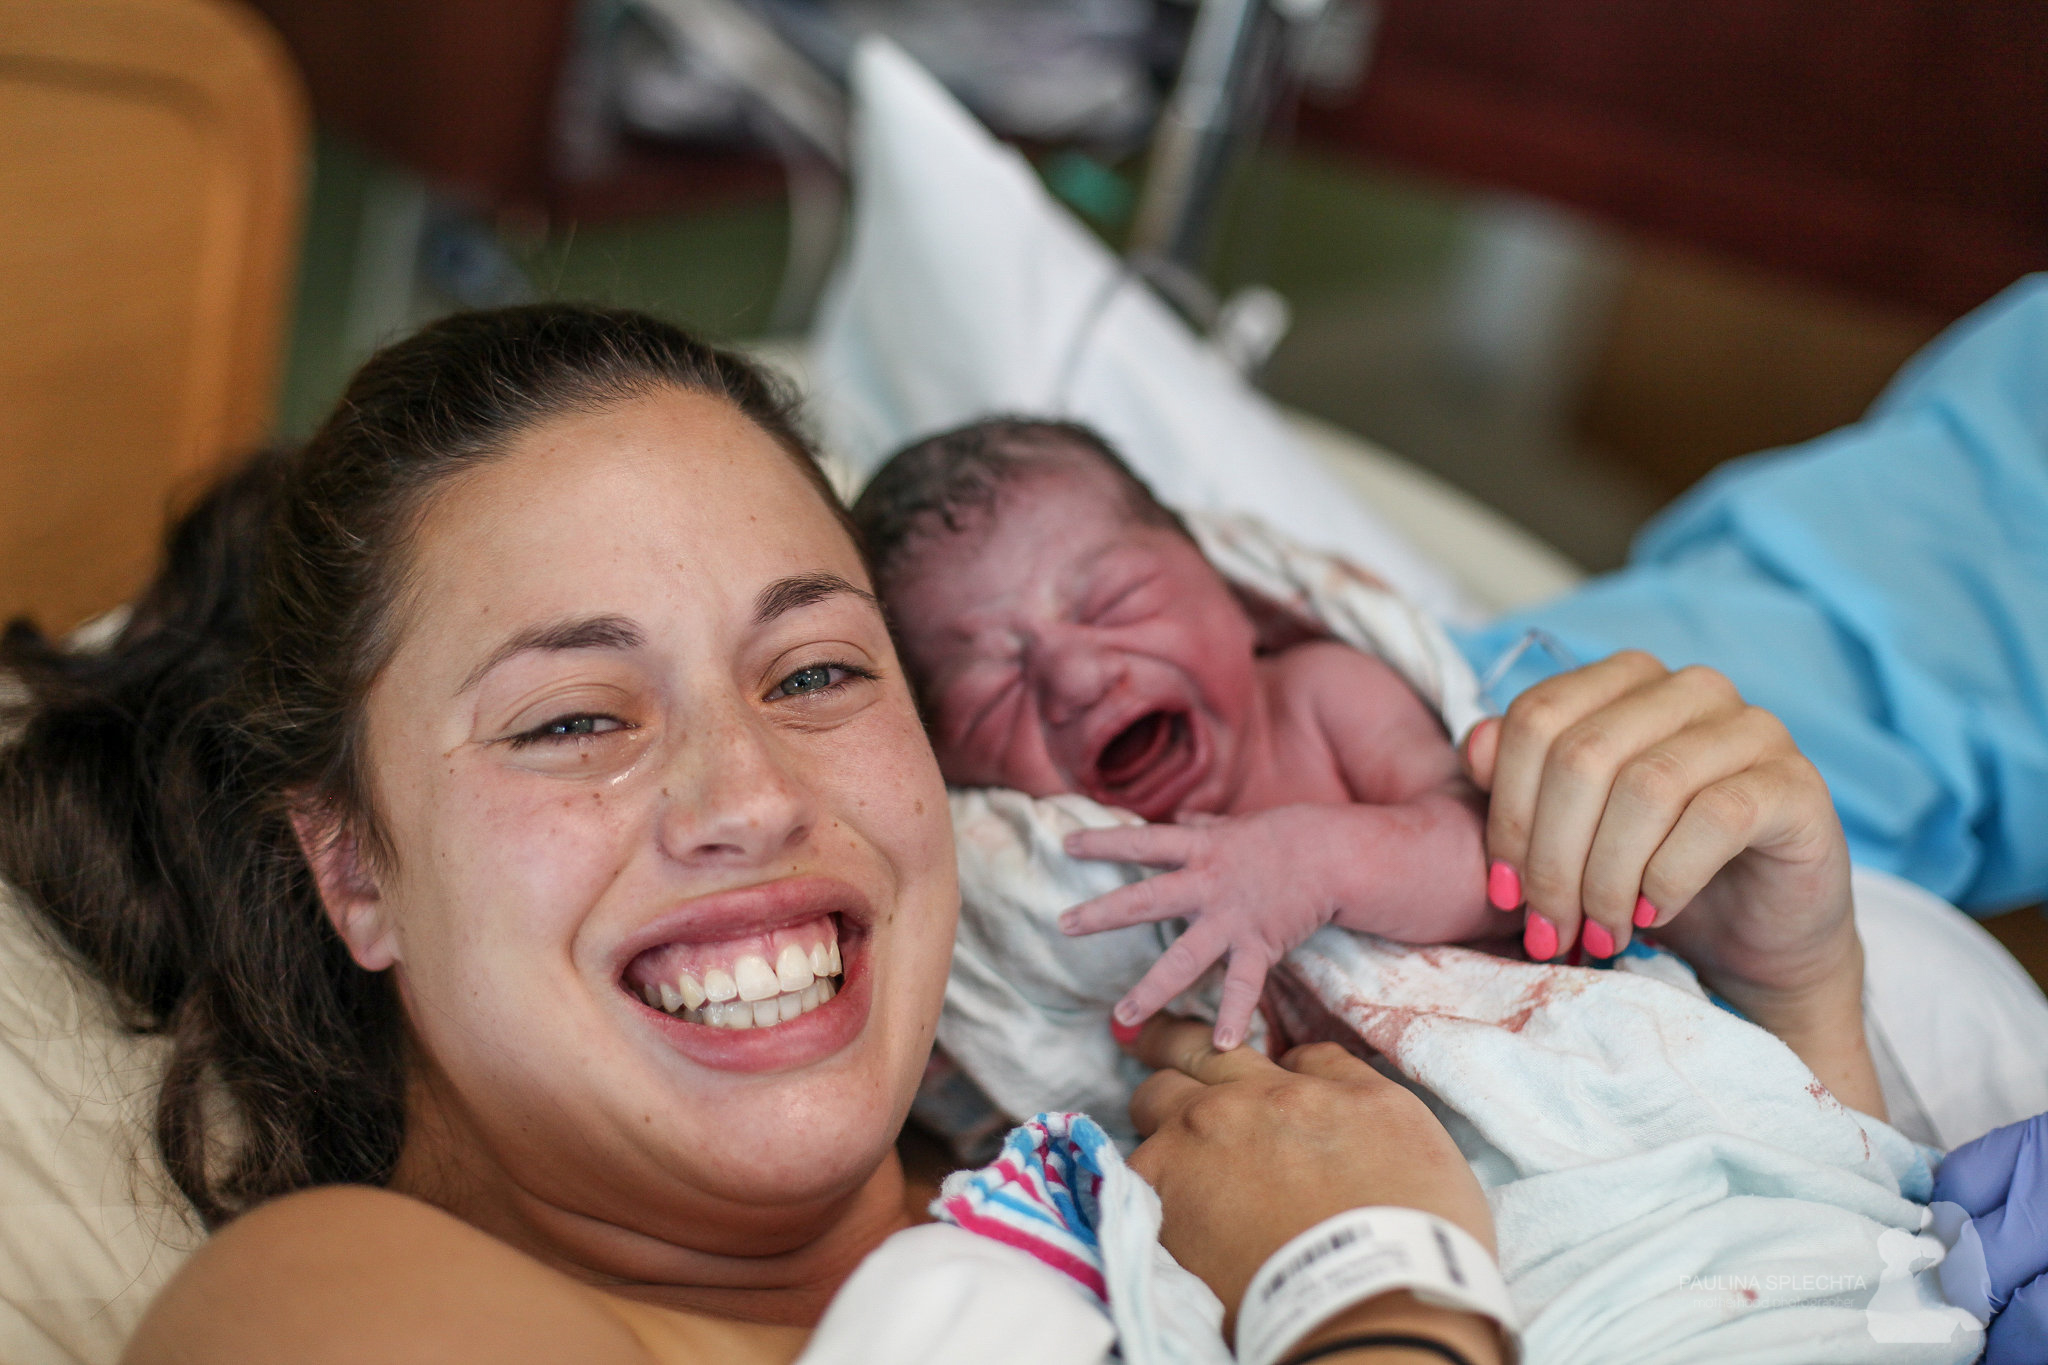 birth-center-hospital-photographer-photography-breastfeeding-south-florida-boca-regional-delray-palms-hollywood-pumping-water-natural-family-newborn-23.jpg